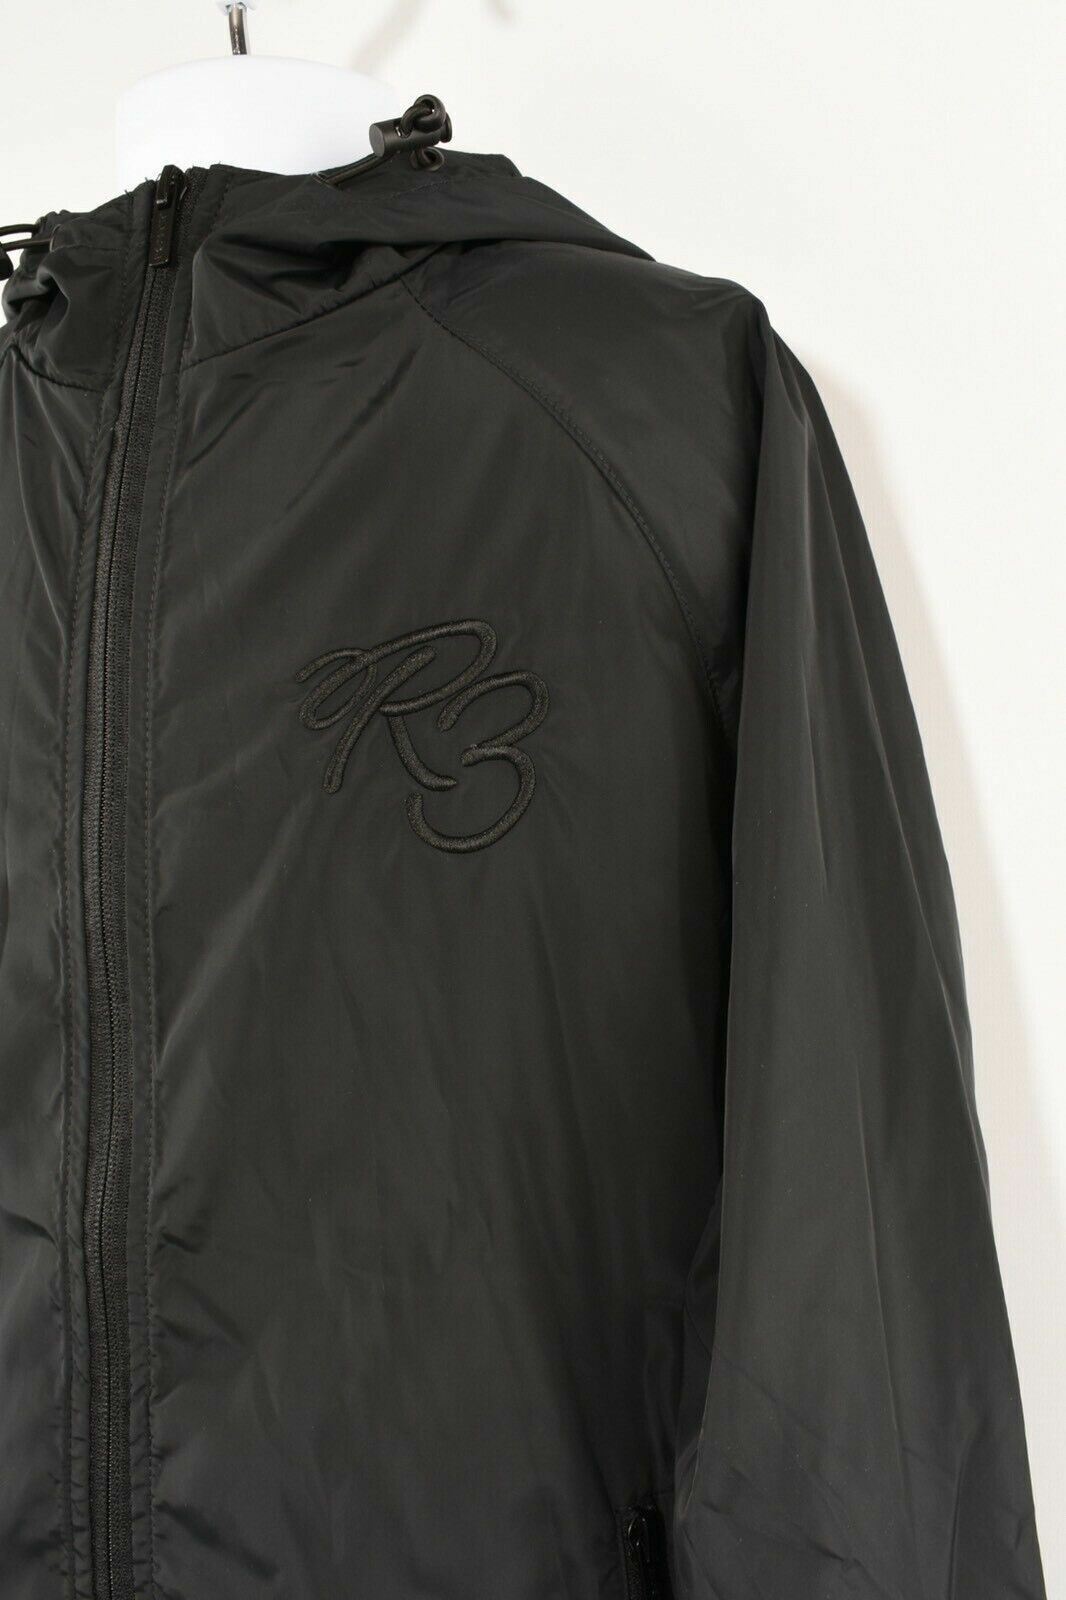 RIPSTOP Boys' Hooded Windbreaker Jacket, Black, size 9 years to 10 years